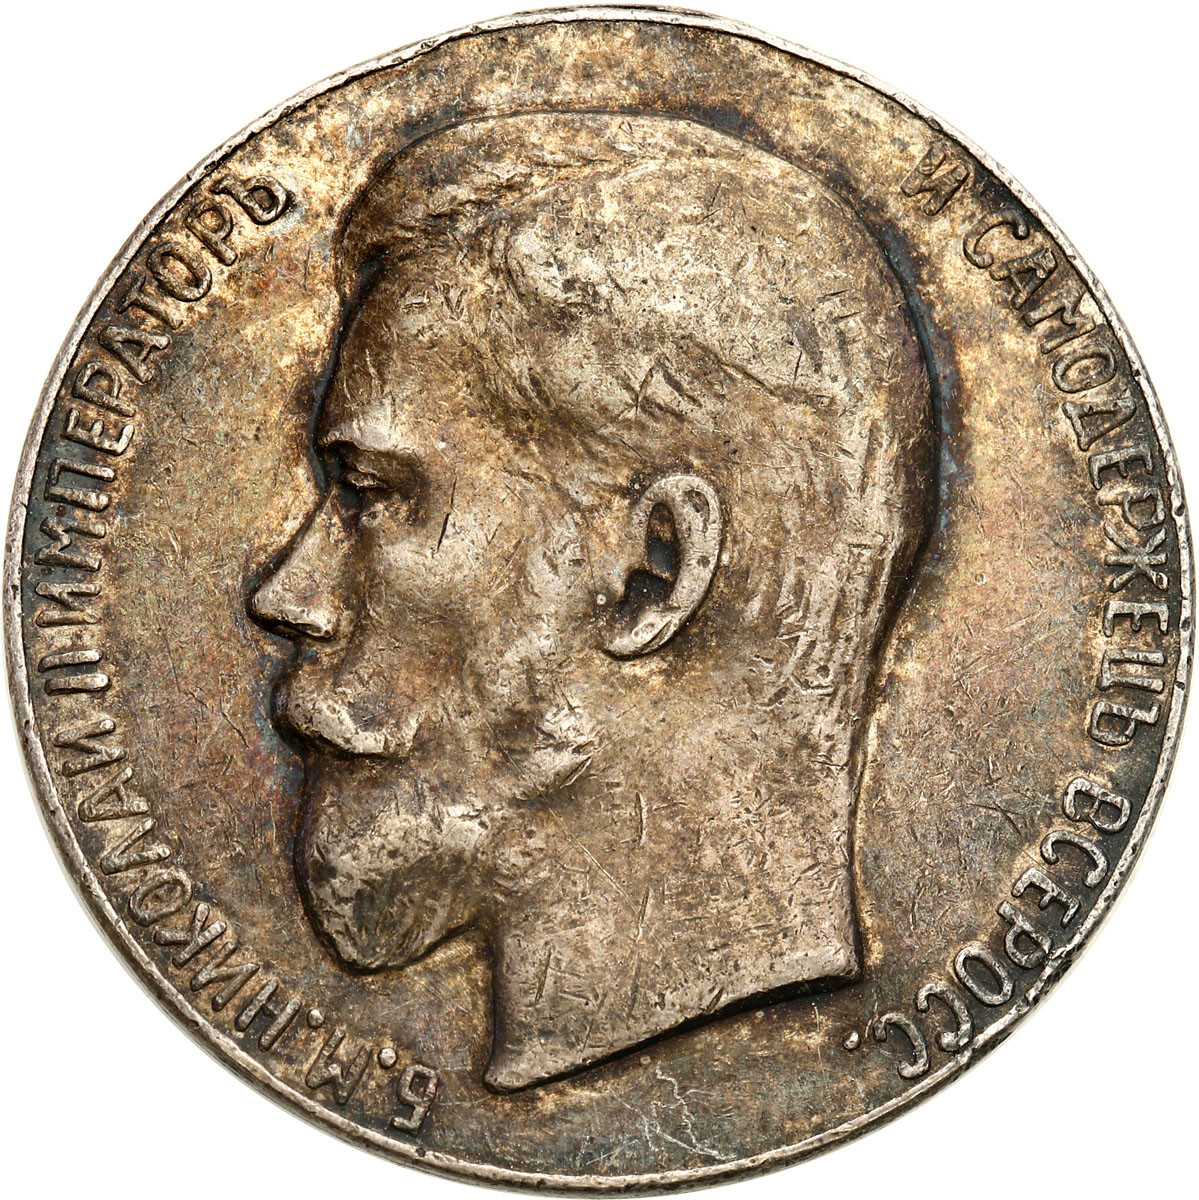 Rosja, Mikołaj II. Medal za gorliwość, srebro